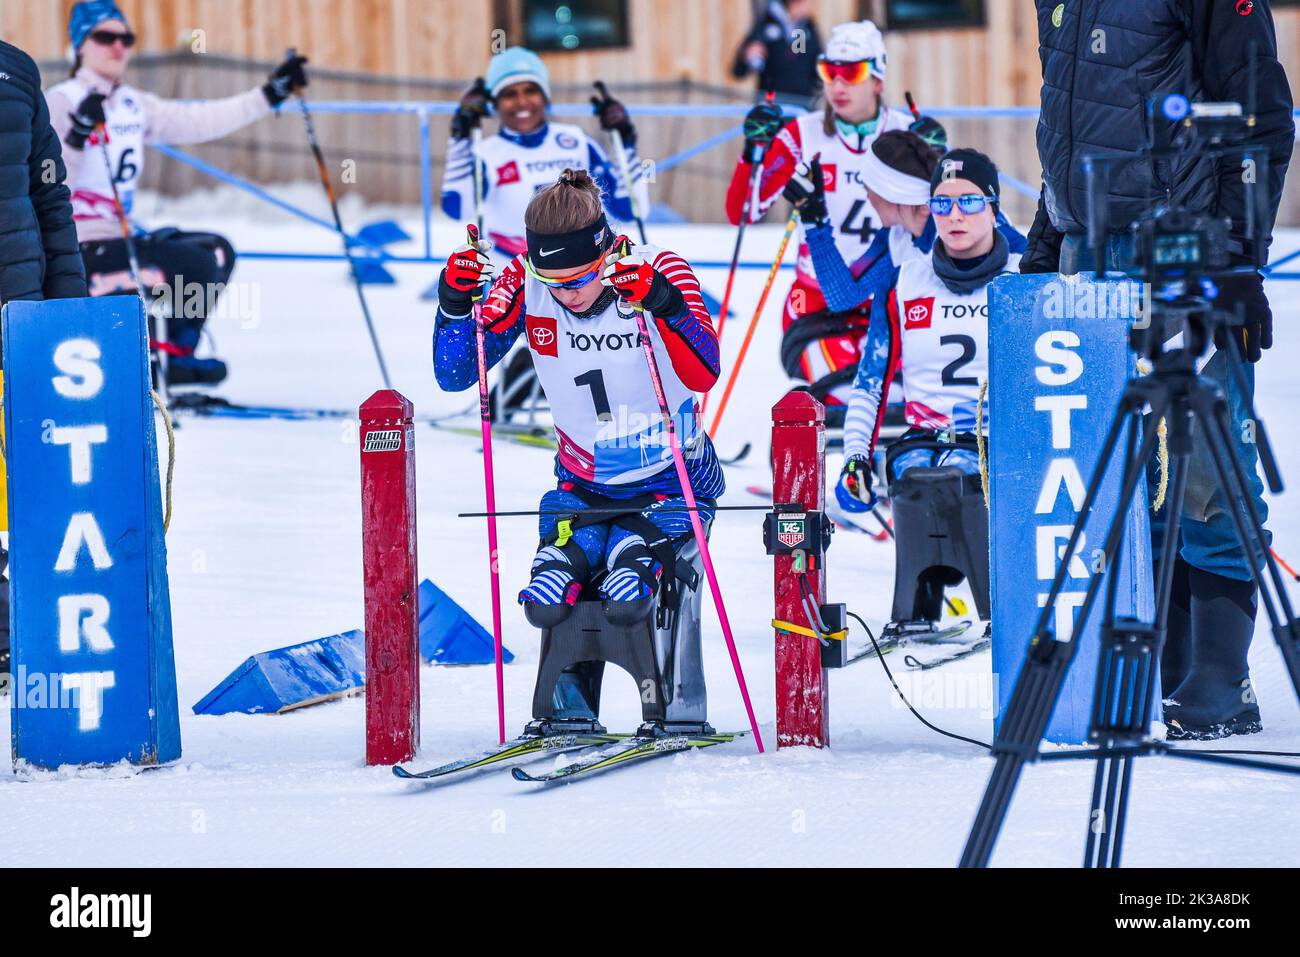 Oksana Masters at the 2019 U.S. Paralympic National Cross Country Ski Championships at Craftsbury Outdoor Center, VT, USA. Stock Photo